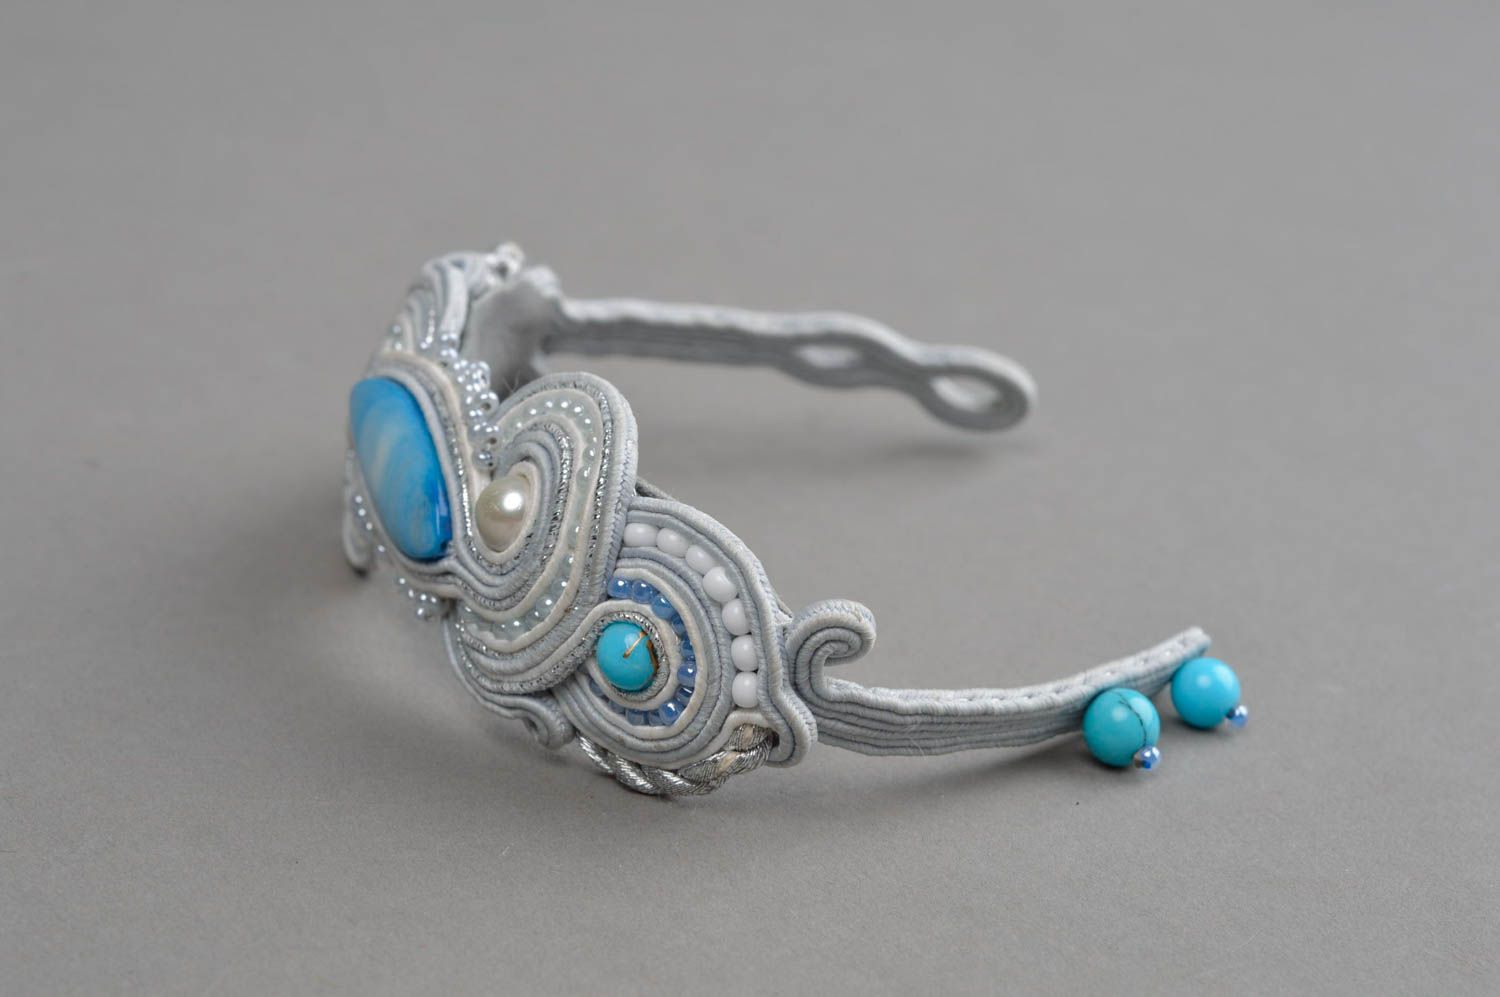 Wrist bracelet handmade soutache bracelet jewelry with embroidery for women photo 3